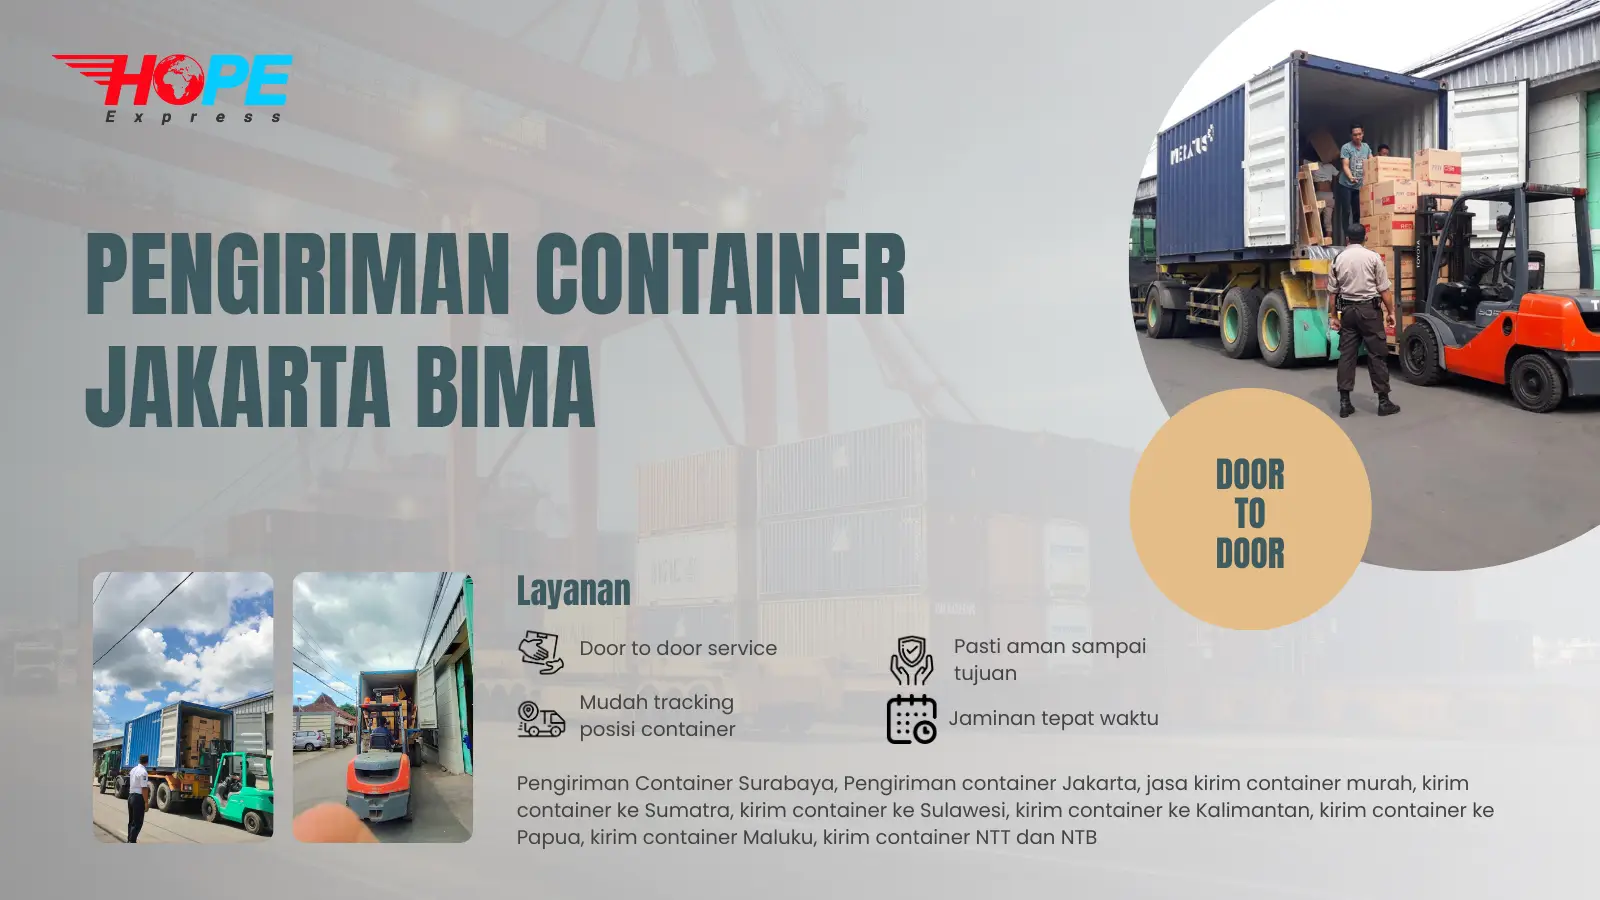 Pengiriman Container Jakarta Bima